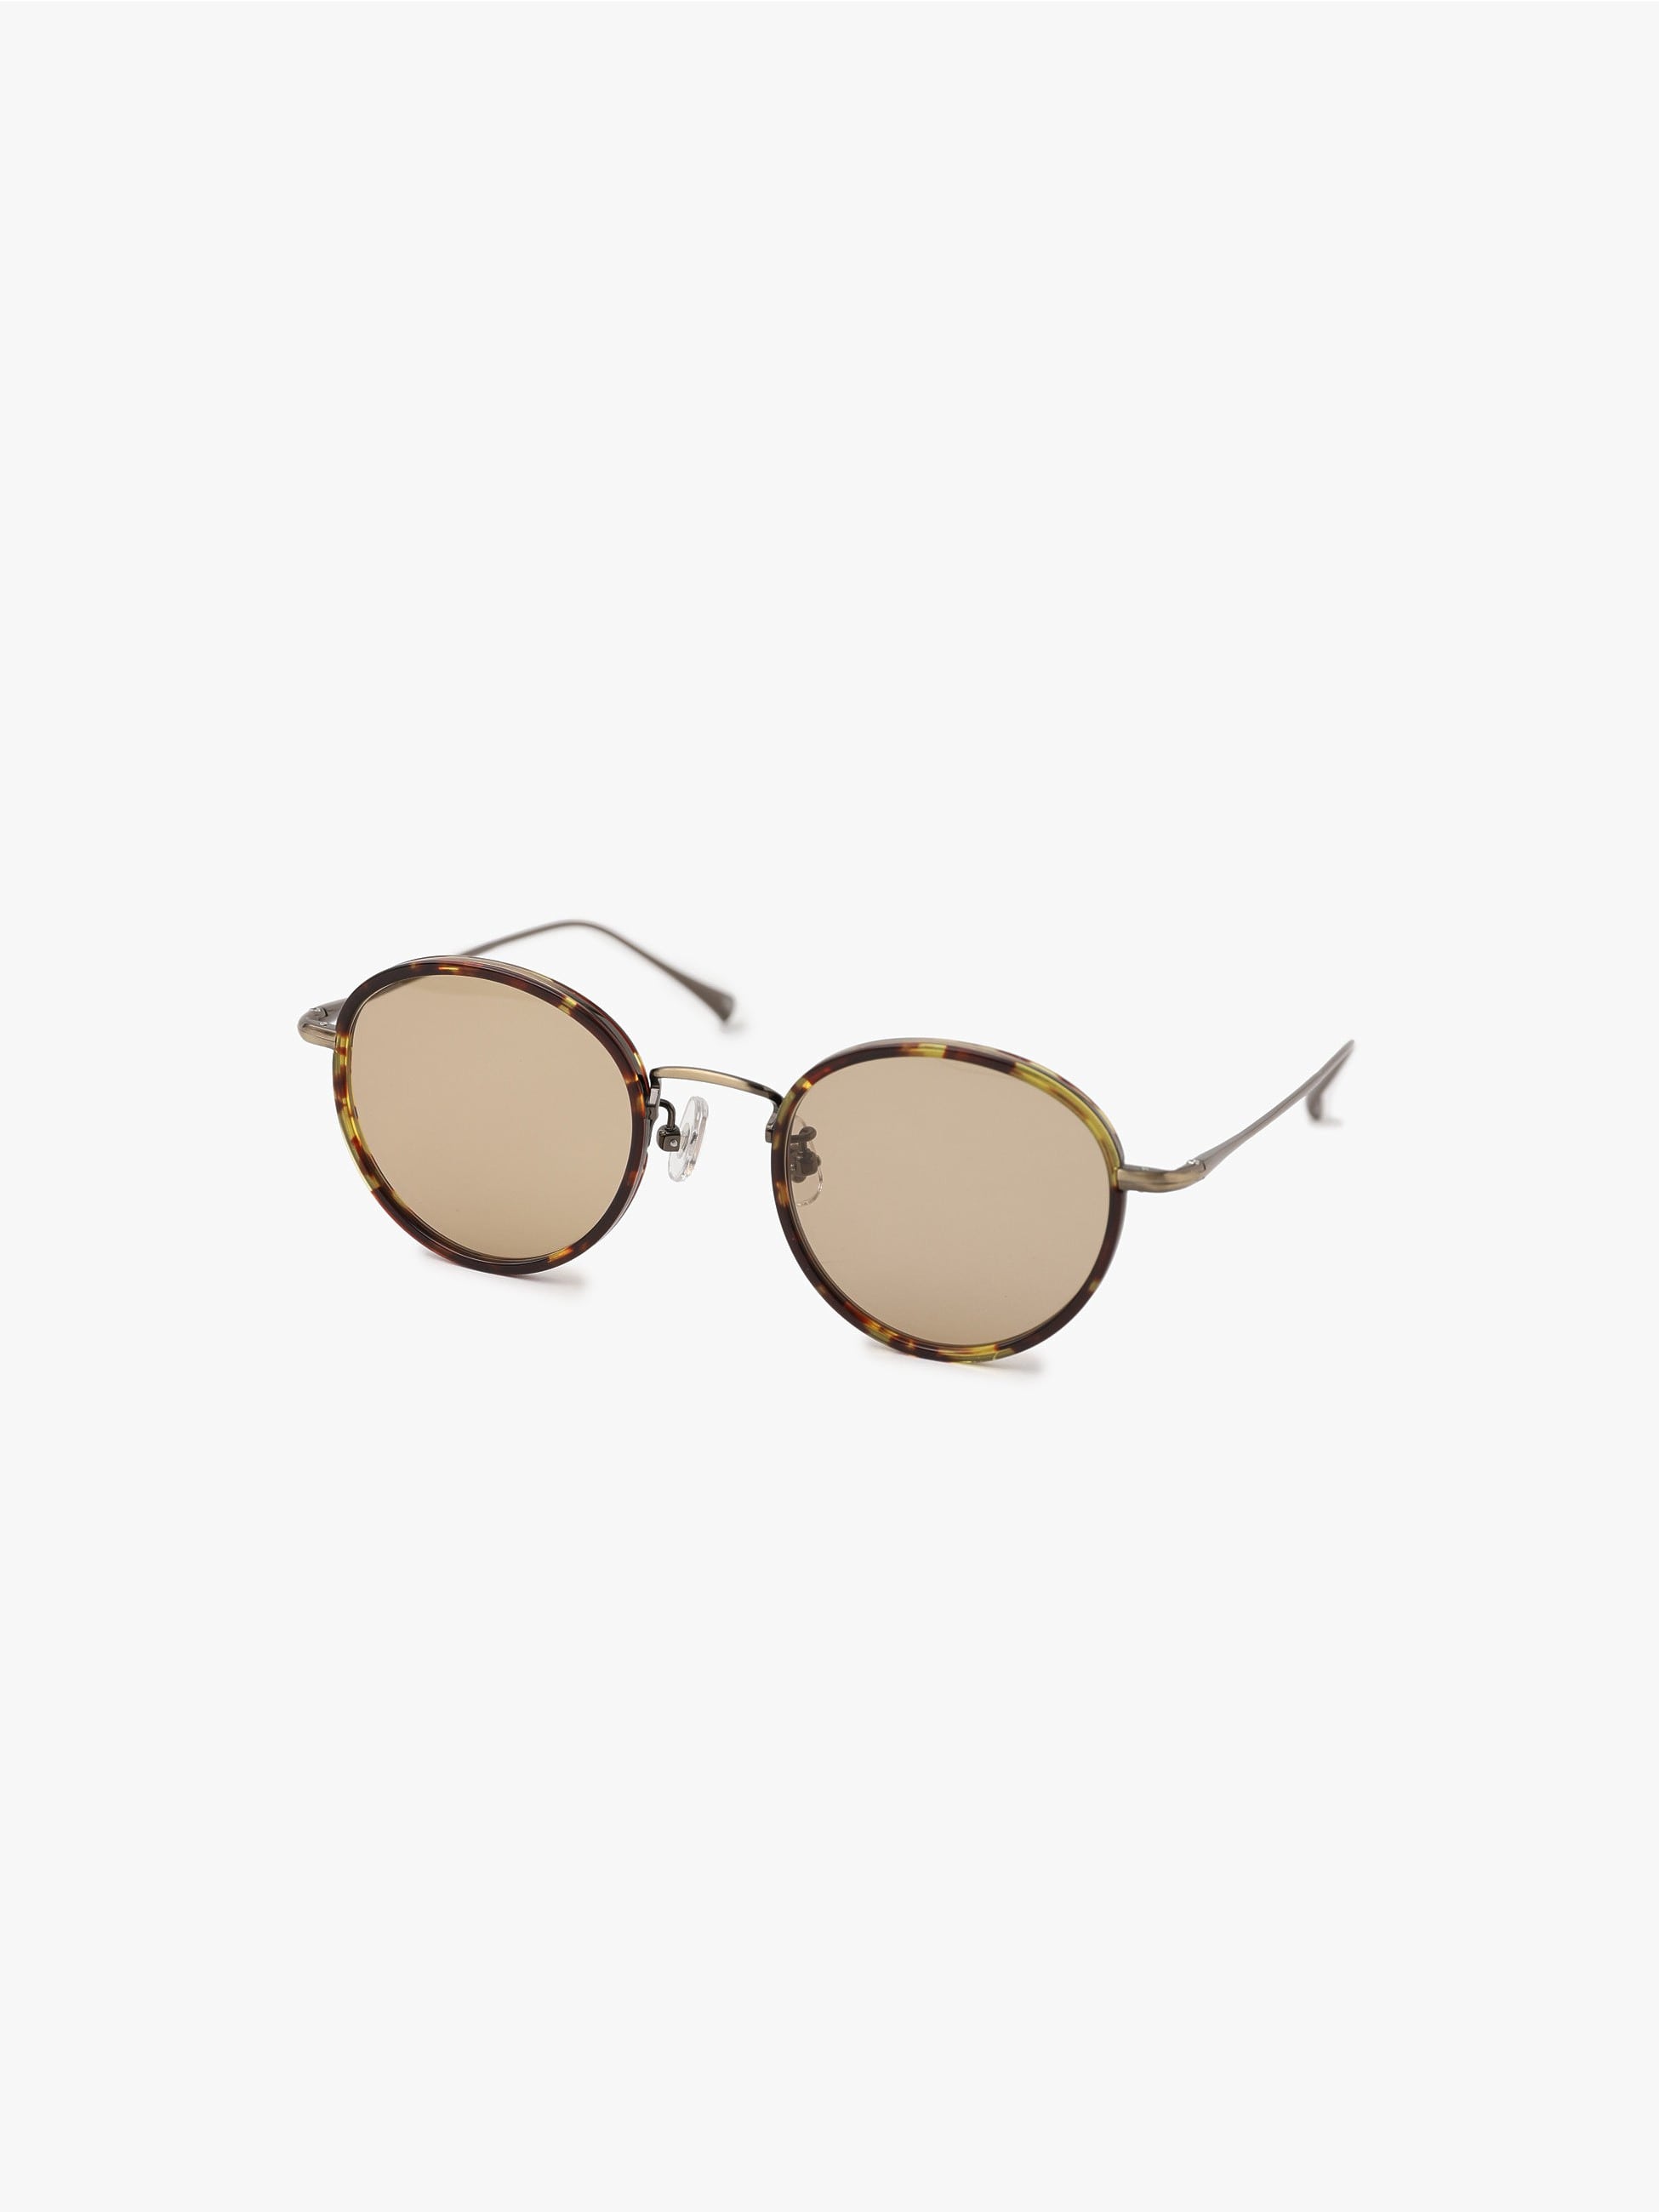 Sunglasses (RH-16 brown) 詳細画像 brown 1